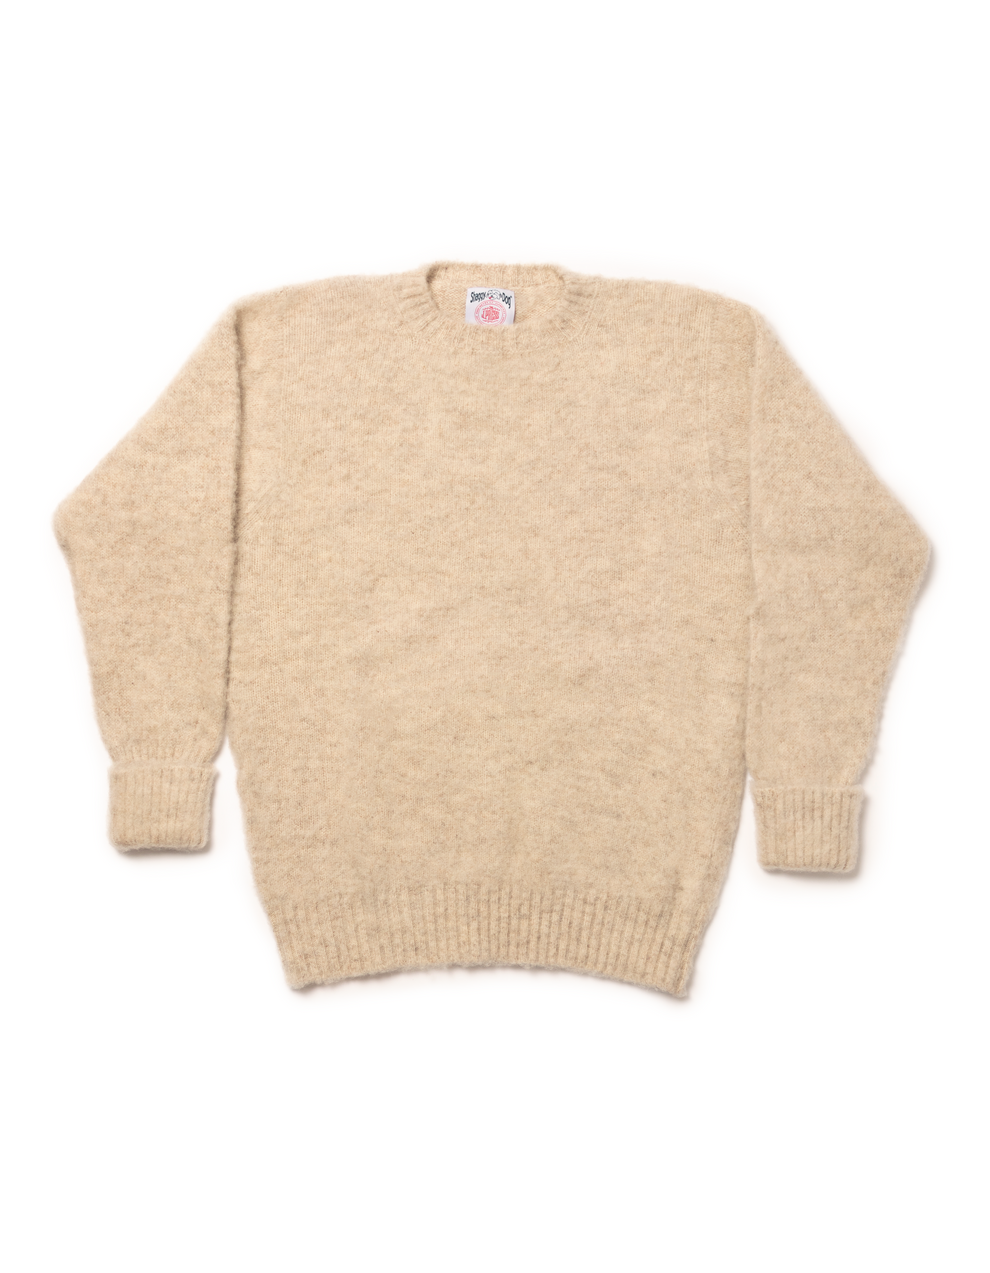 Shaggy Dog Sweater Ivory - Classic Fit| Men's Shaggy Dog Sweater – J. PRESS